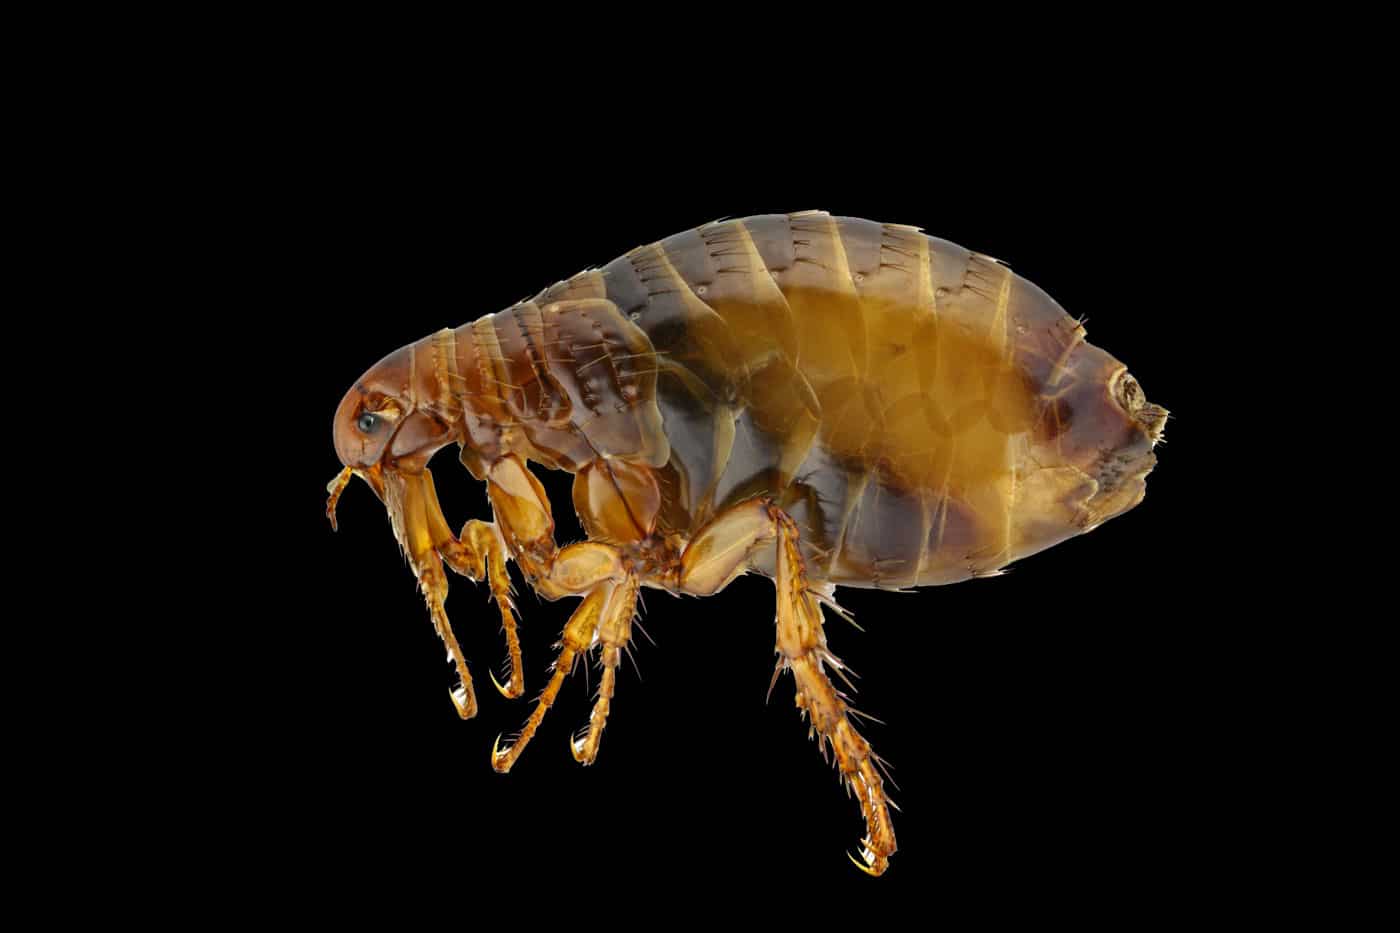 Flea-Borne Typhus - What You Need to Know